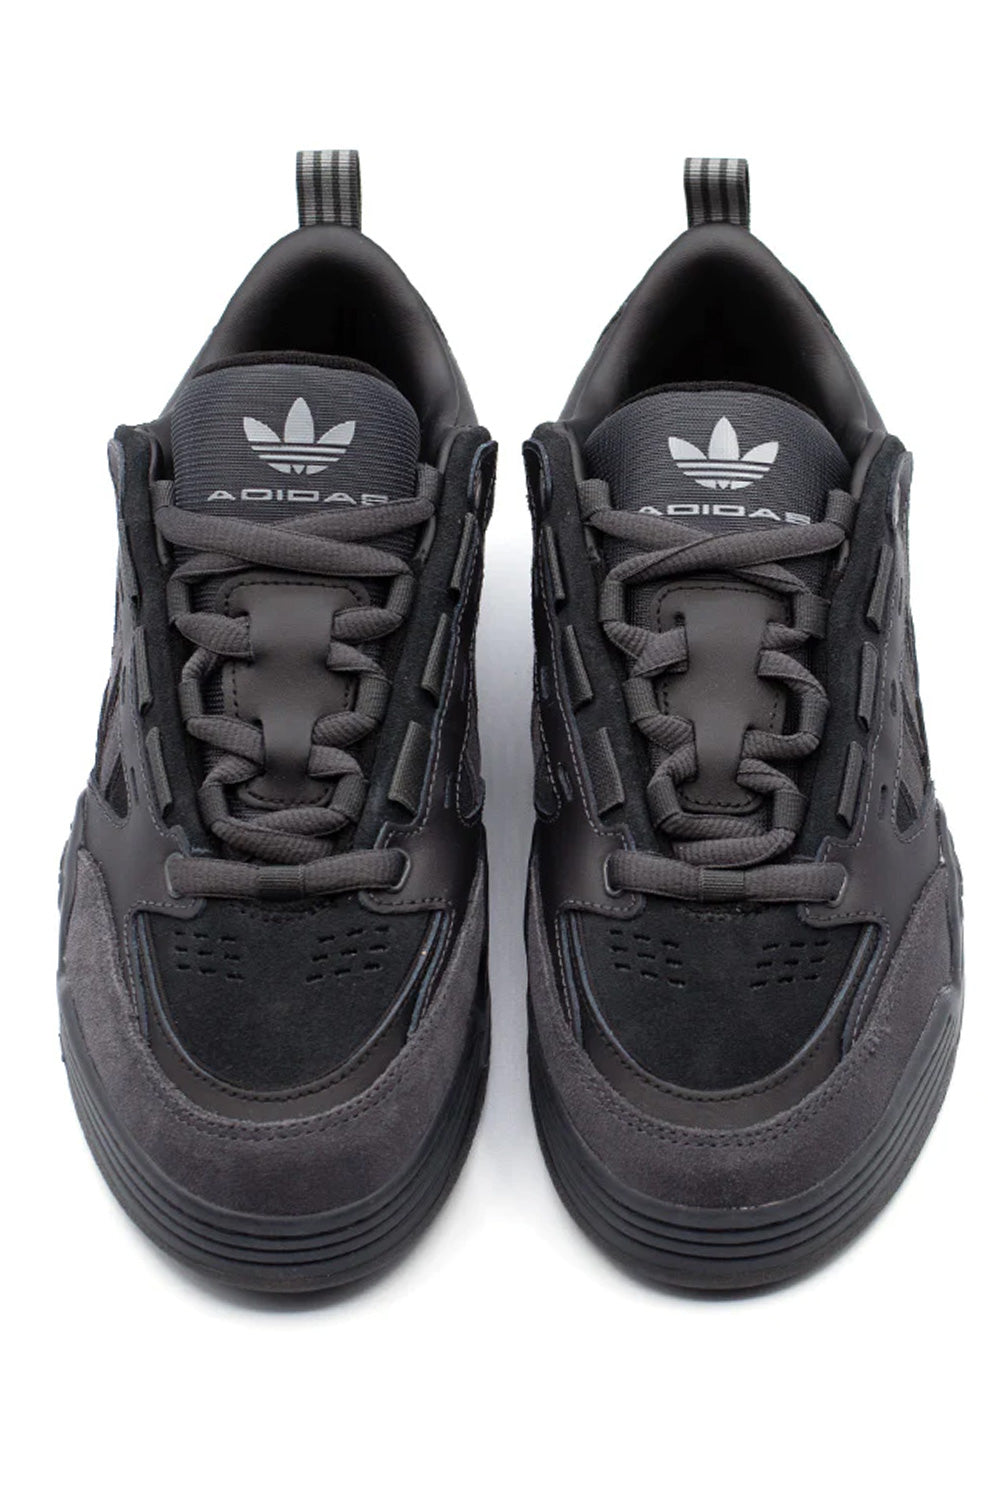 Adidas Adi2000 Shoe Core Black / Utility Black / Utility Black | BONKERS